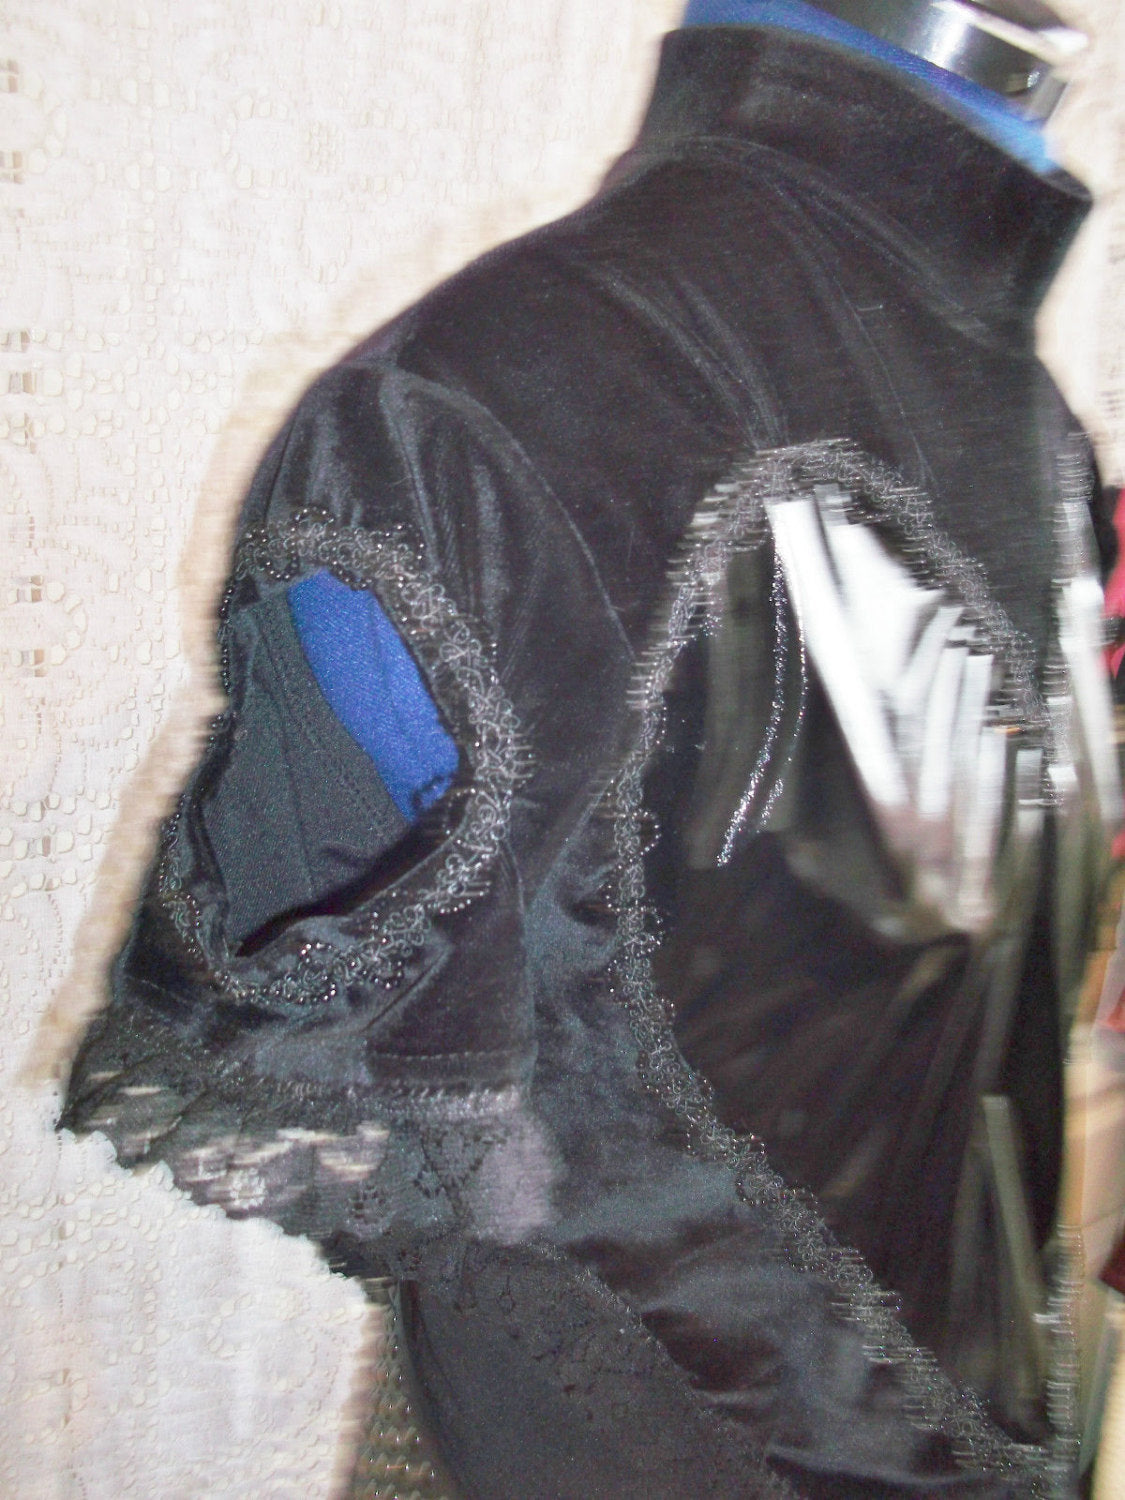 PUNK /gothROCK bespoke ORIGINAL velvet/pvc heart top. size10.cut-out back design. one off. Wonkey Donkey Bazaar